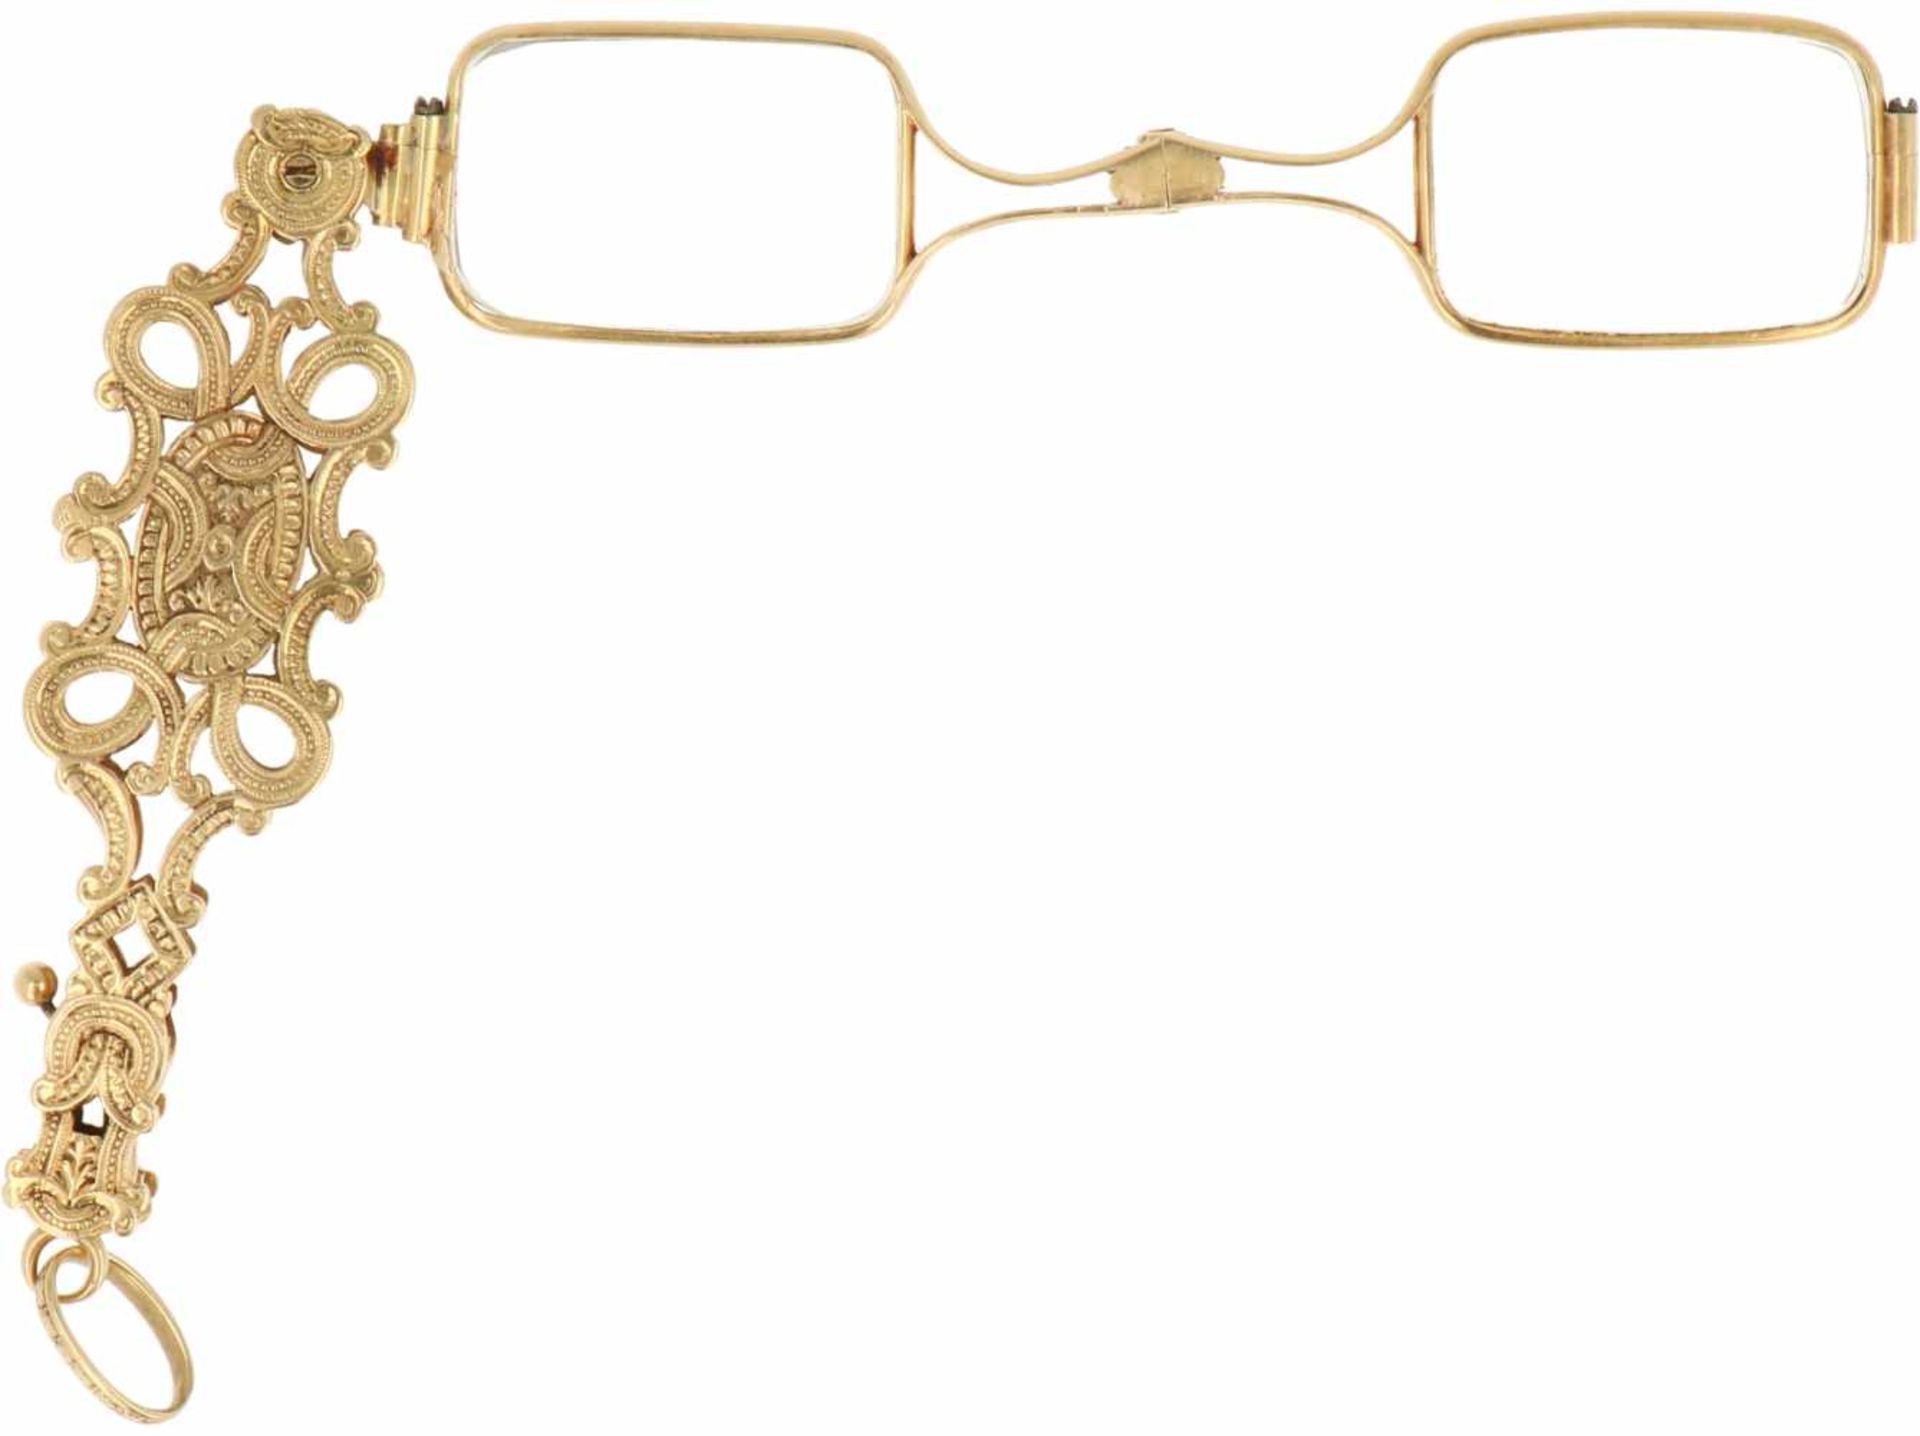 Gold lorgnette glasses.